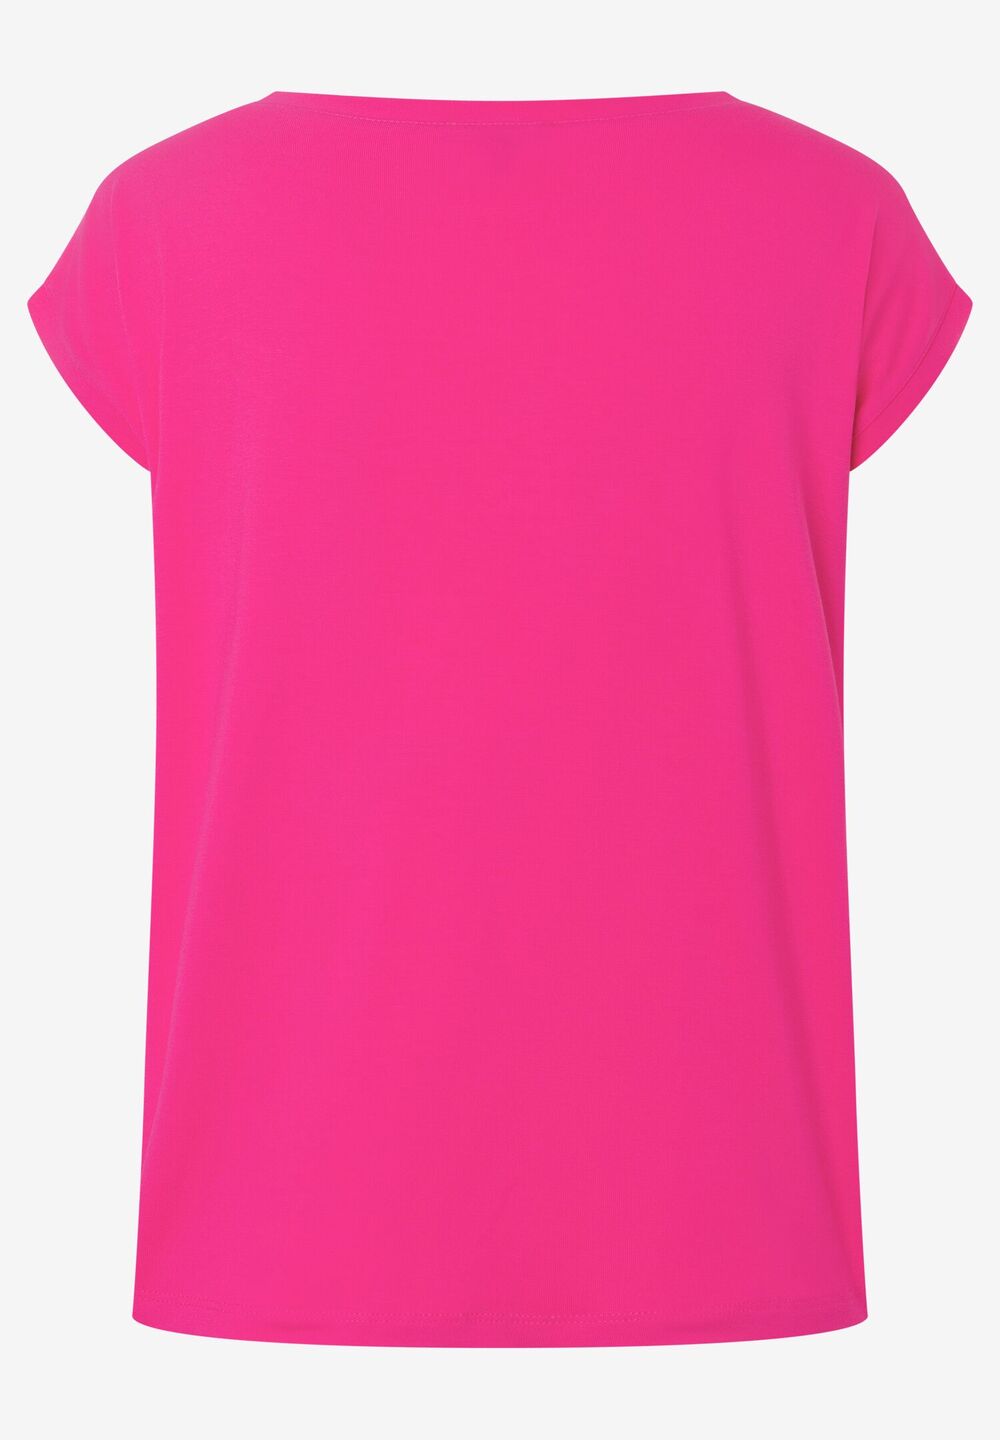 T-Shirt mit Chiffonkante, orchid pink, Sommer-Kollektion, pink Rückansicht